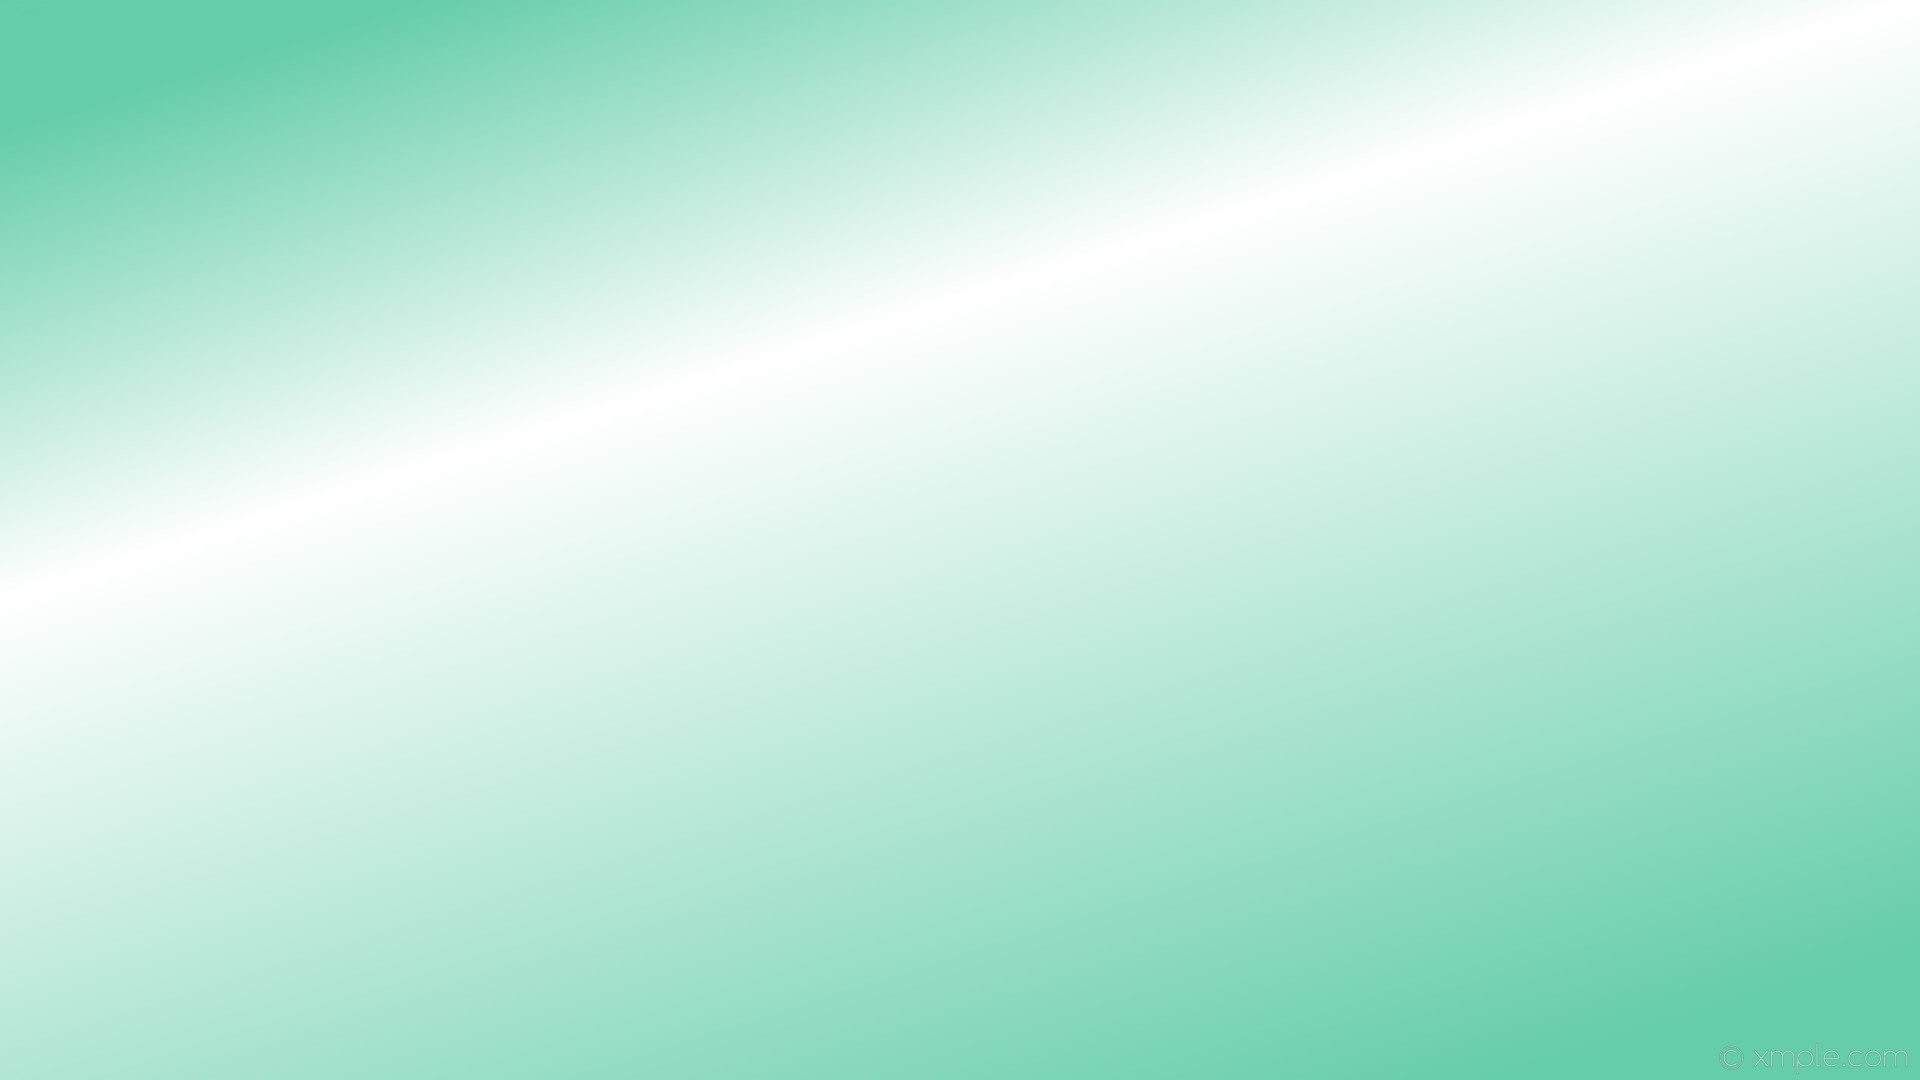 1920x1080 wallpaper gradient white linear green highlight medium aquamarine #66cdaa  #ffffff 315Â° 67%